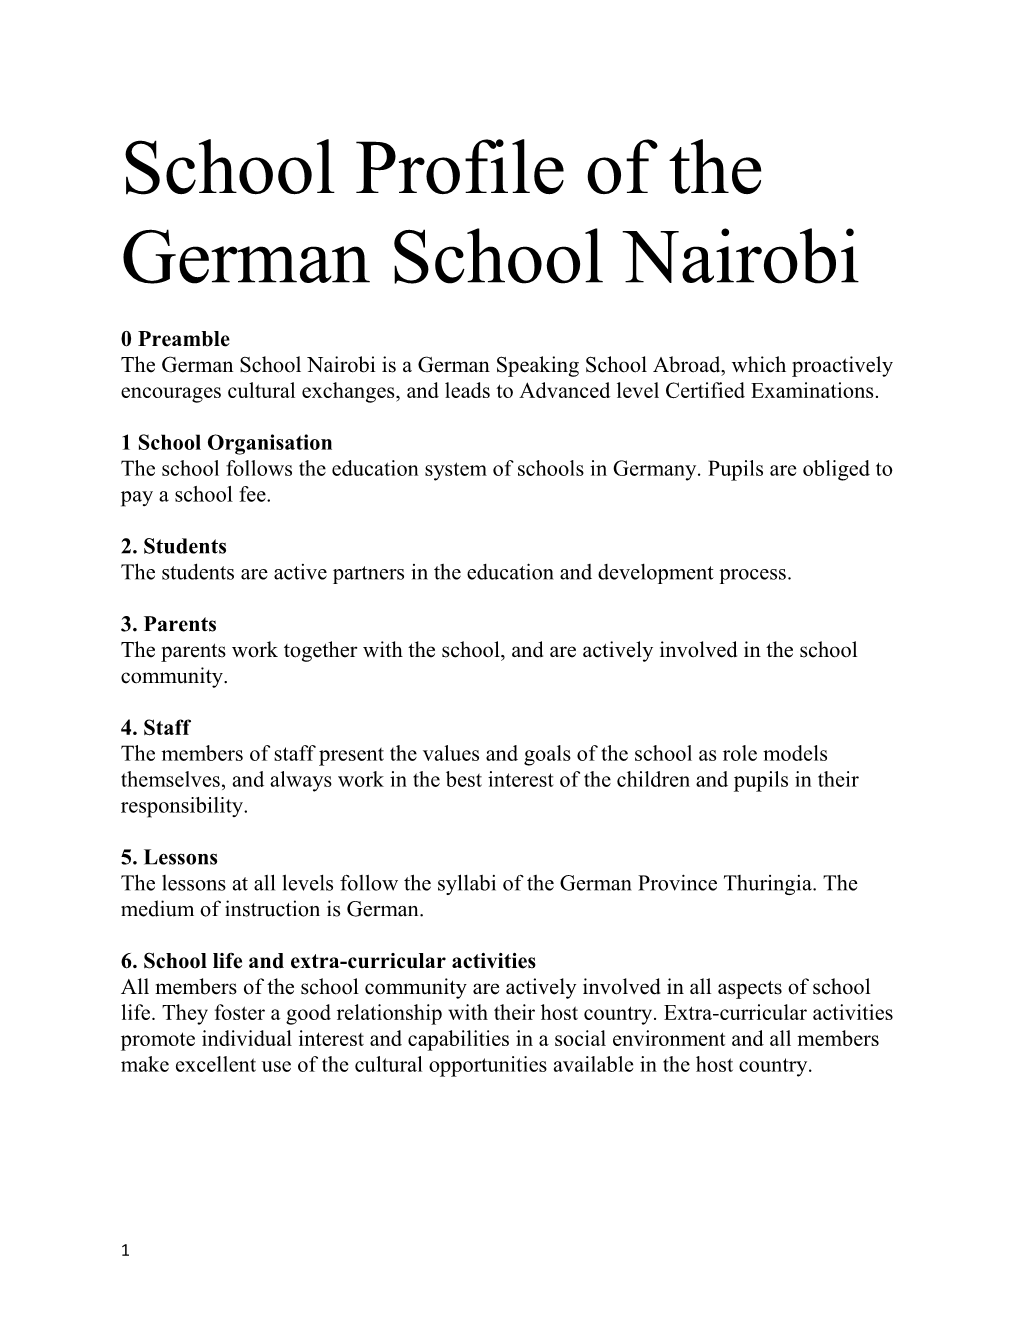 School Profile of the German School Nairobi